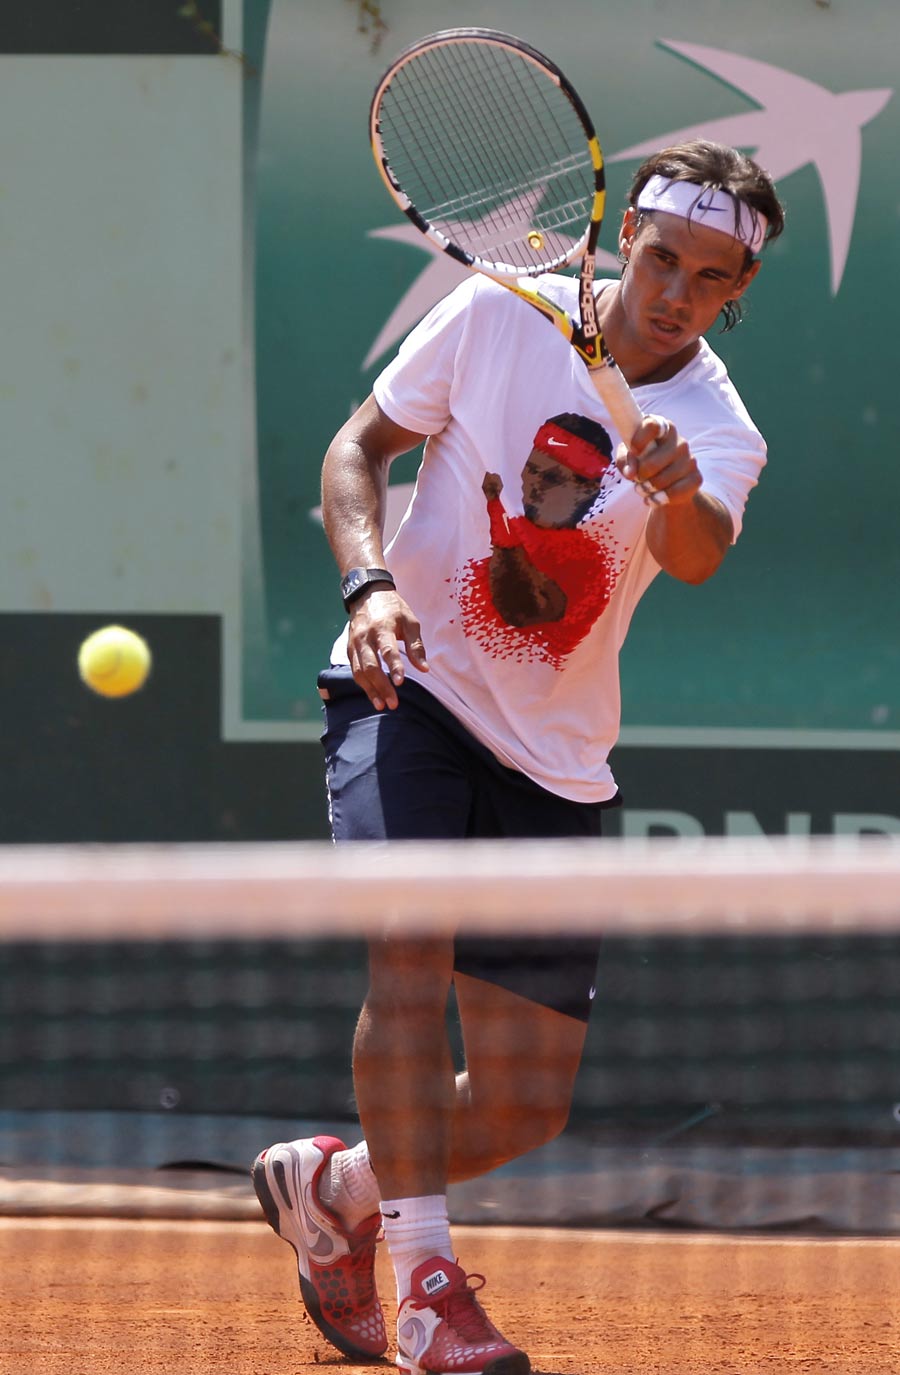 Rafael Nadal trains at Roland Garros